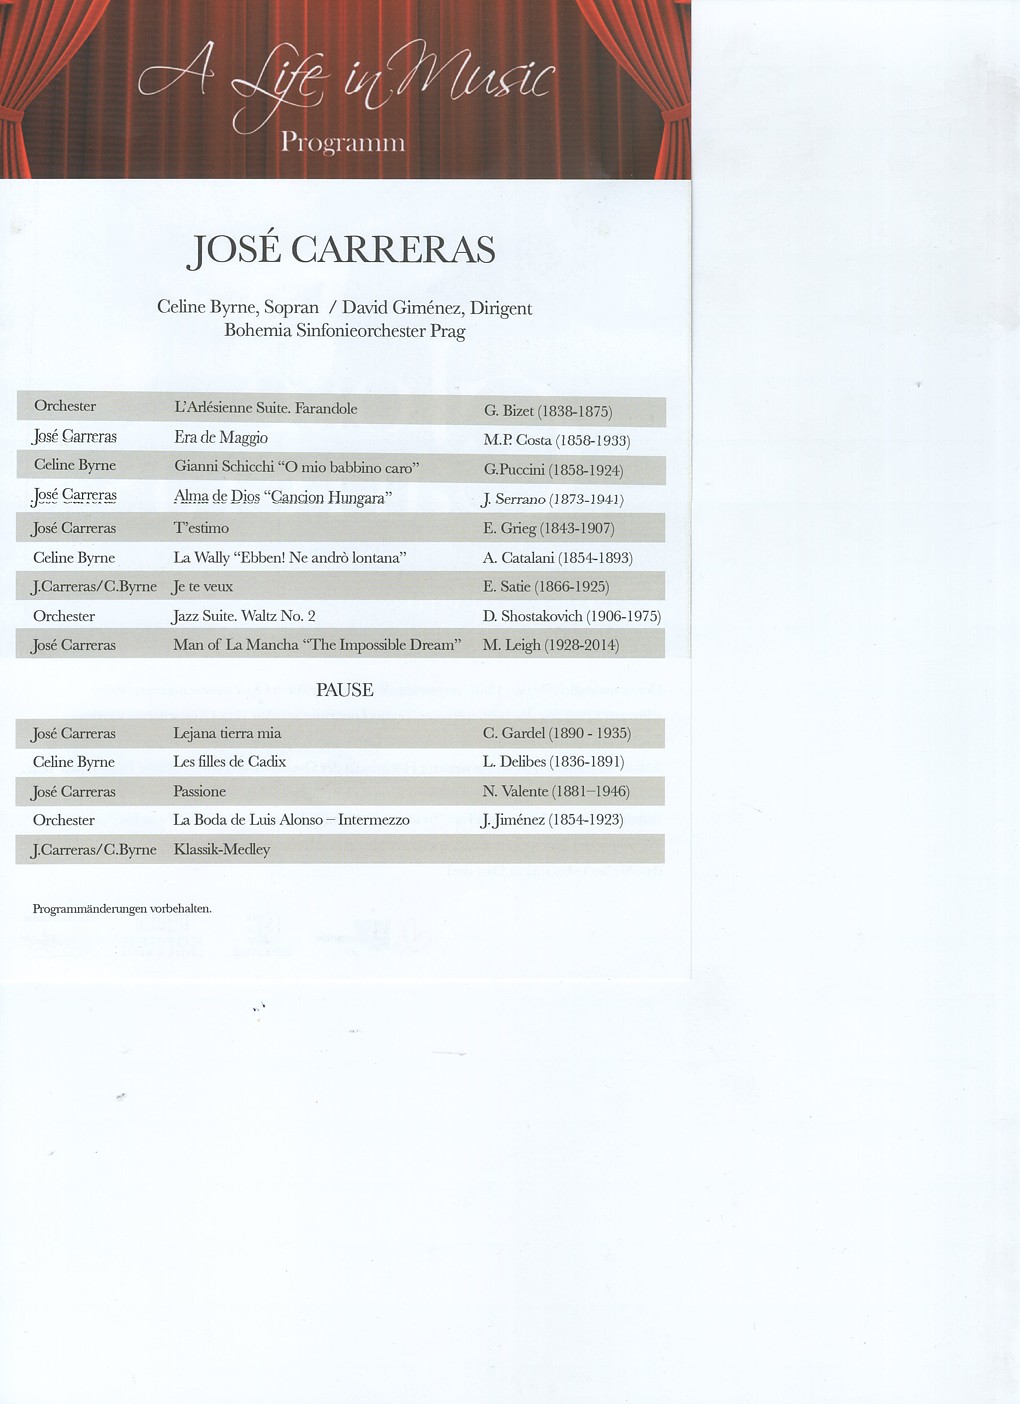 José Carreras - Final World Tour